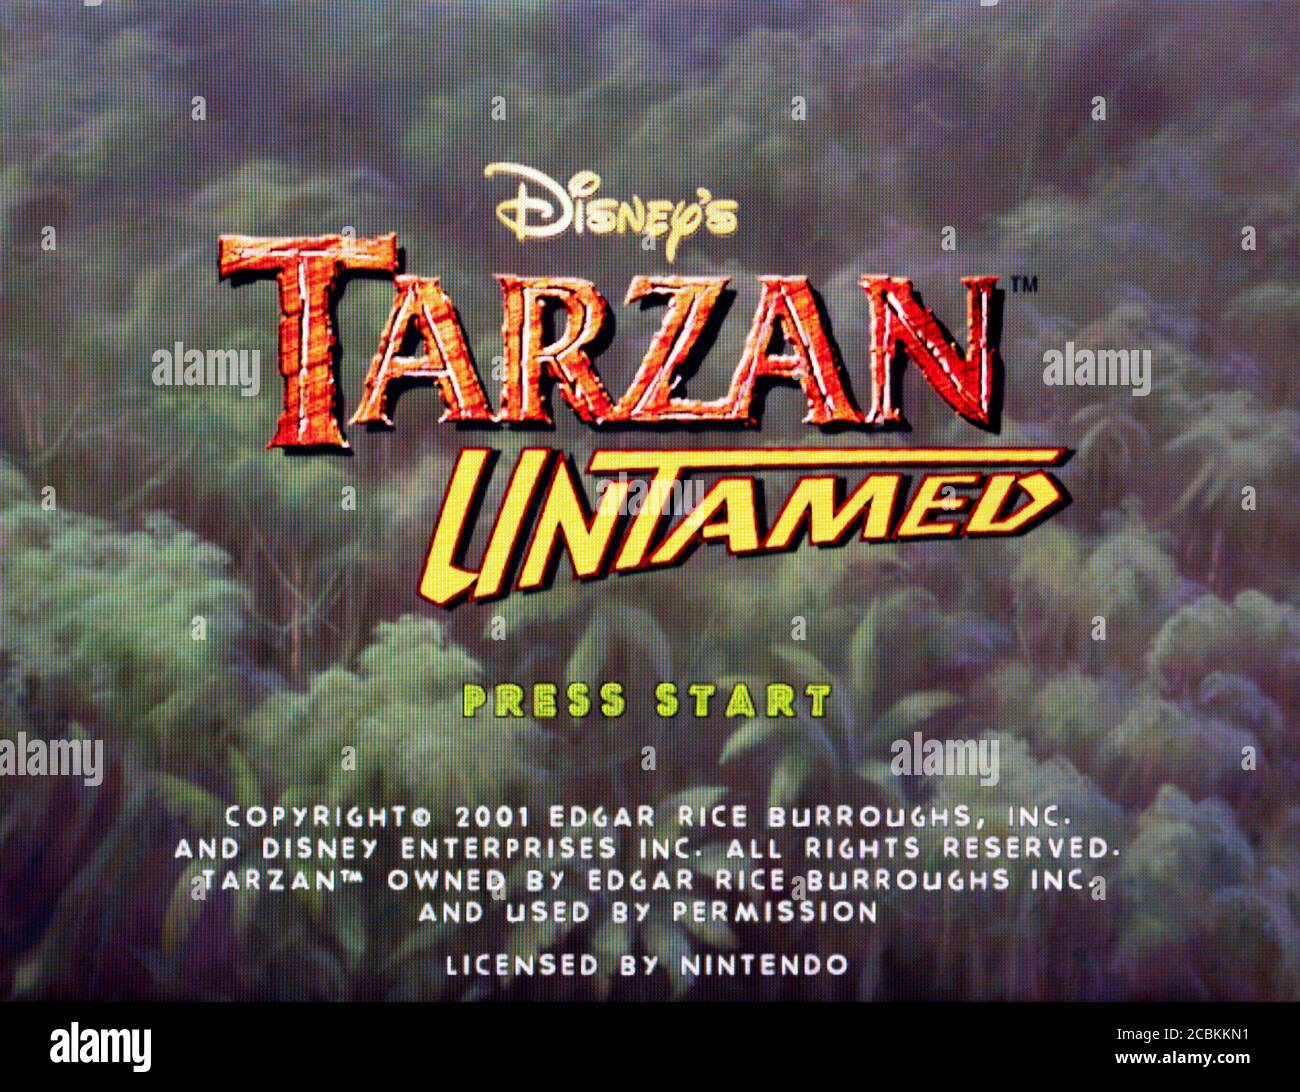 Disney's Tarzan Untamed - Nintendo Gamecube Videogame - Editorial use only Stock Photo